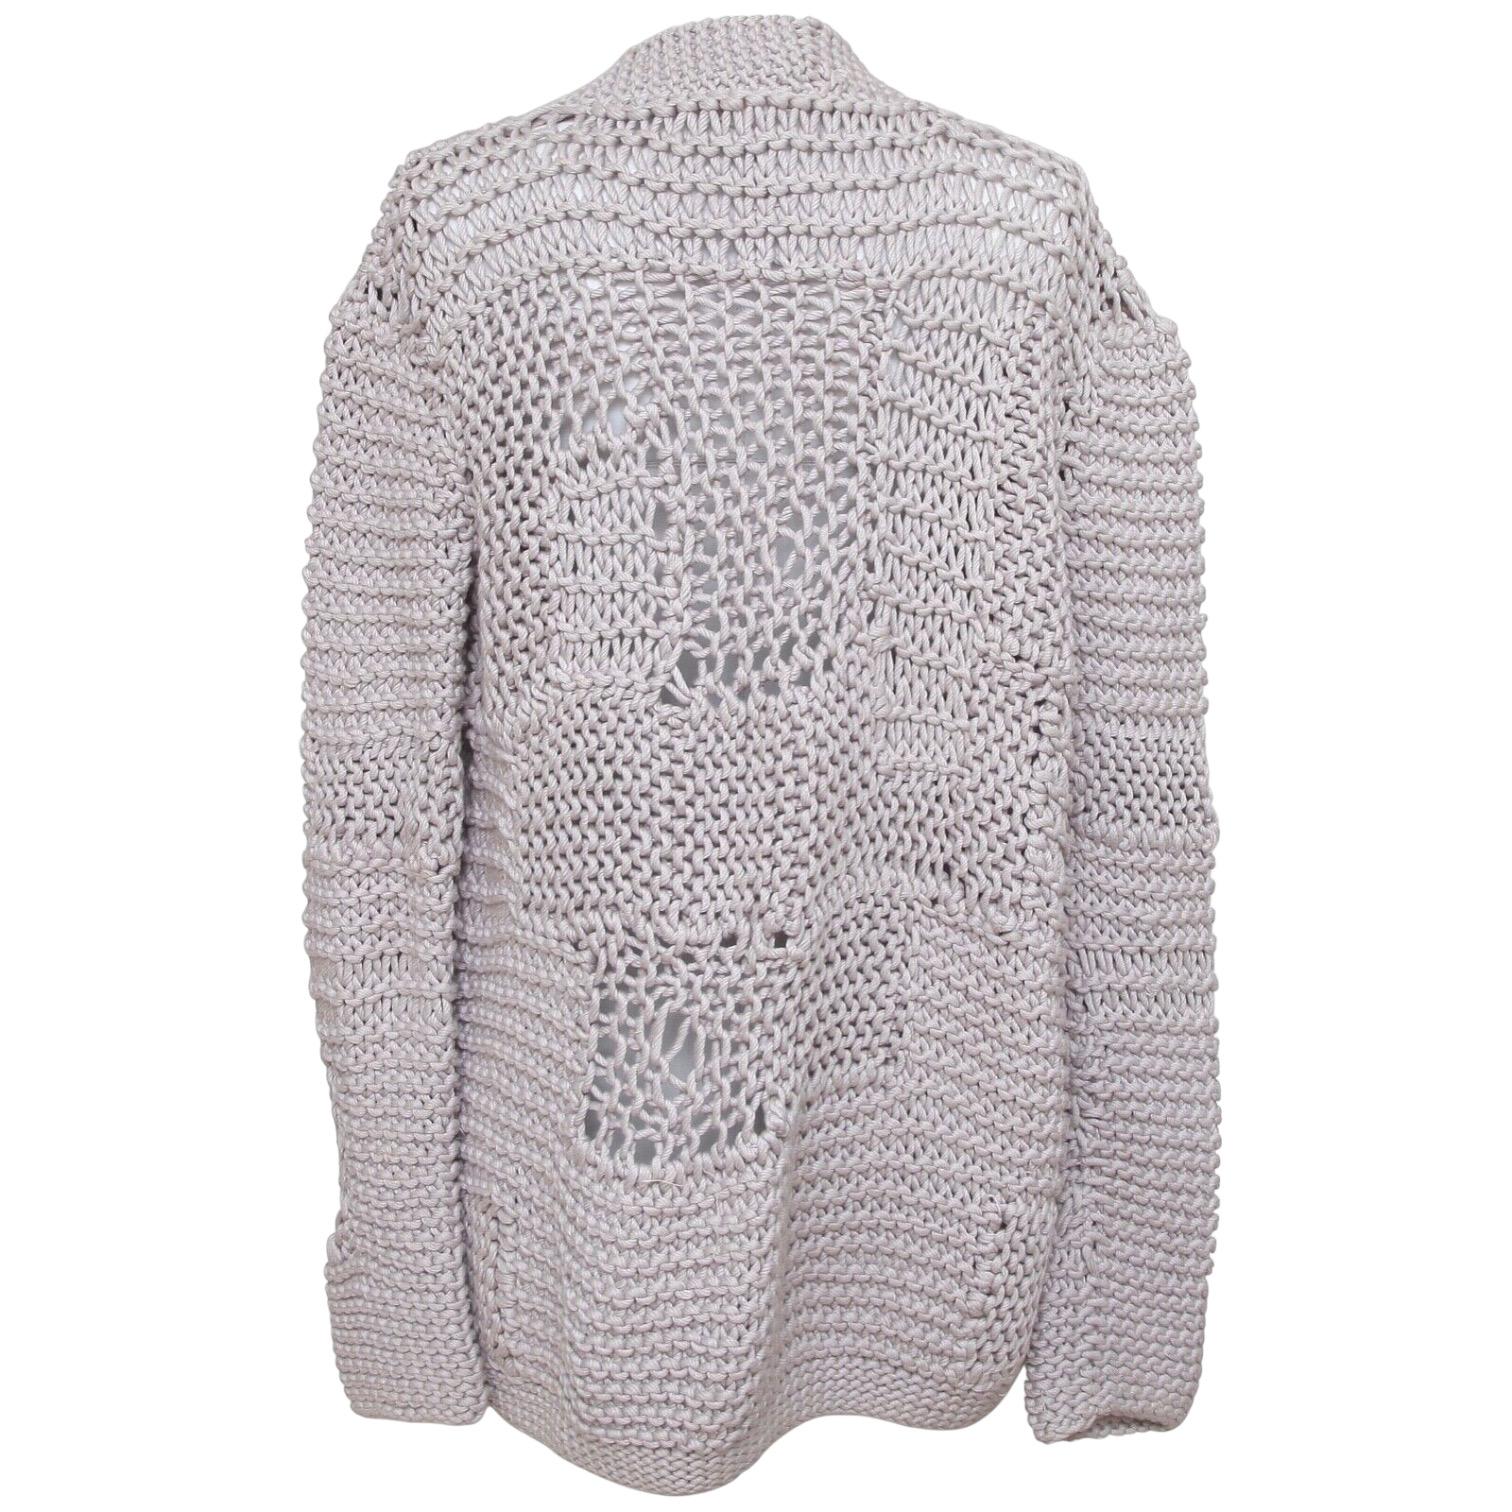 CHLOE Cardigan Sweater Knit Grey Lavender Open Front Long Sleeve Sz S 2008 For Sale 4